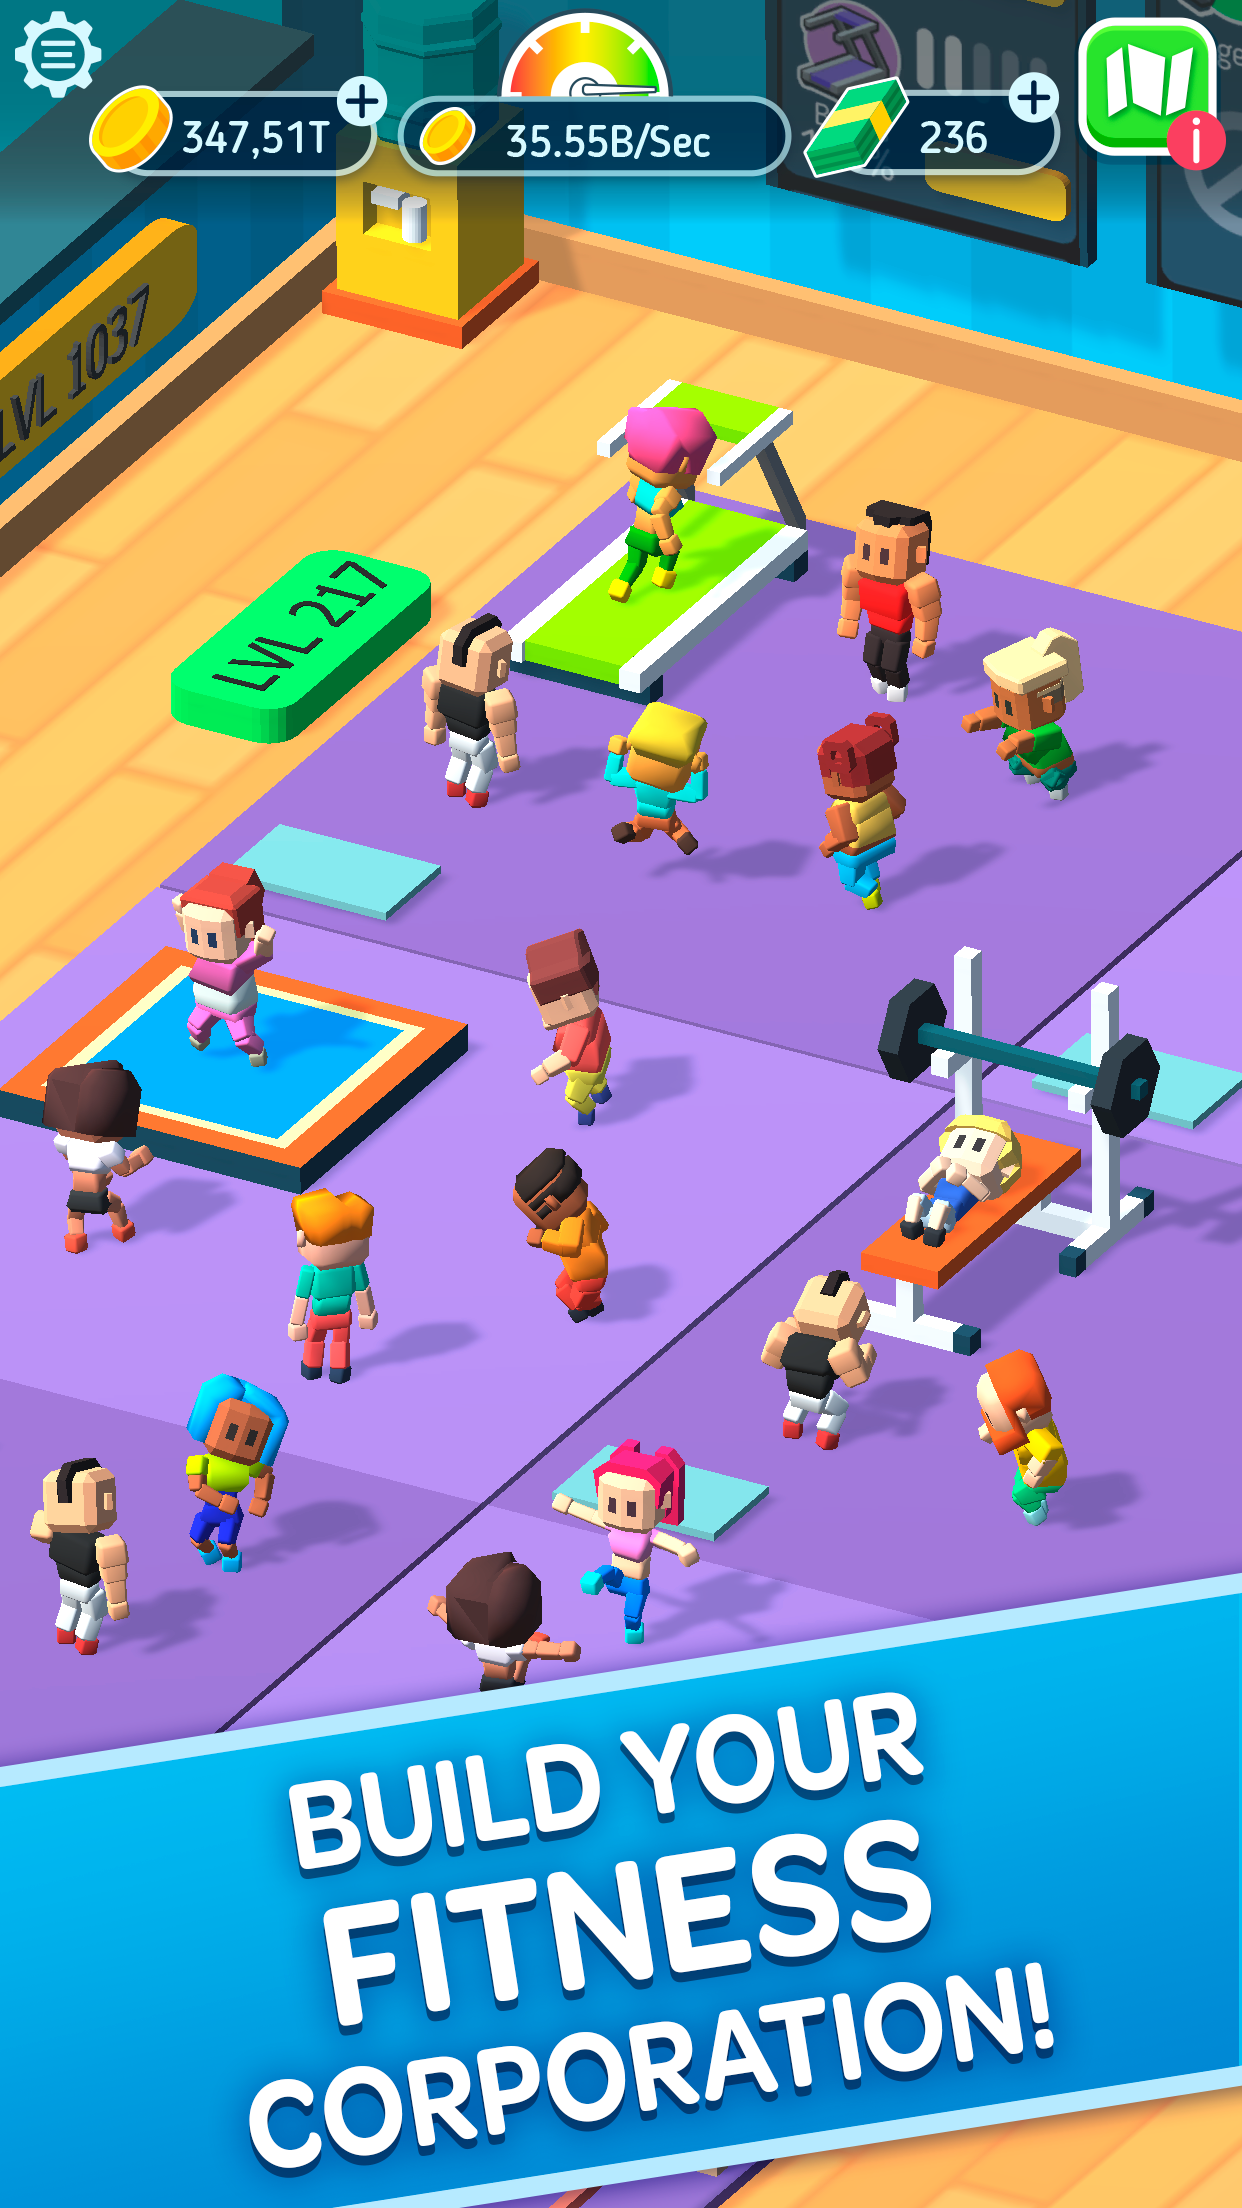 Screenshot 1 of Fitness Corp. - праздные спортивные деловые игры 0.1